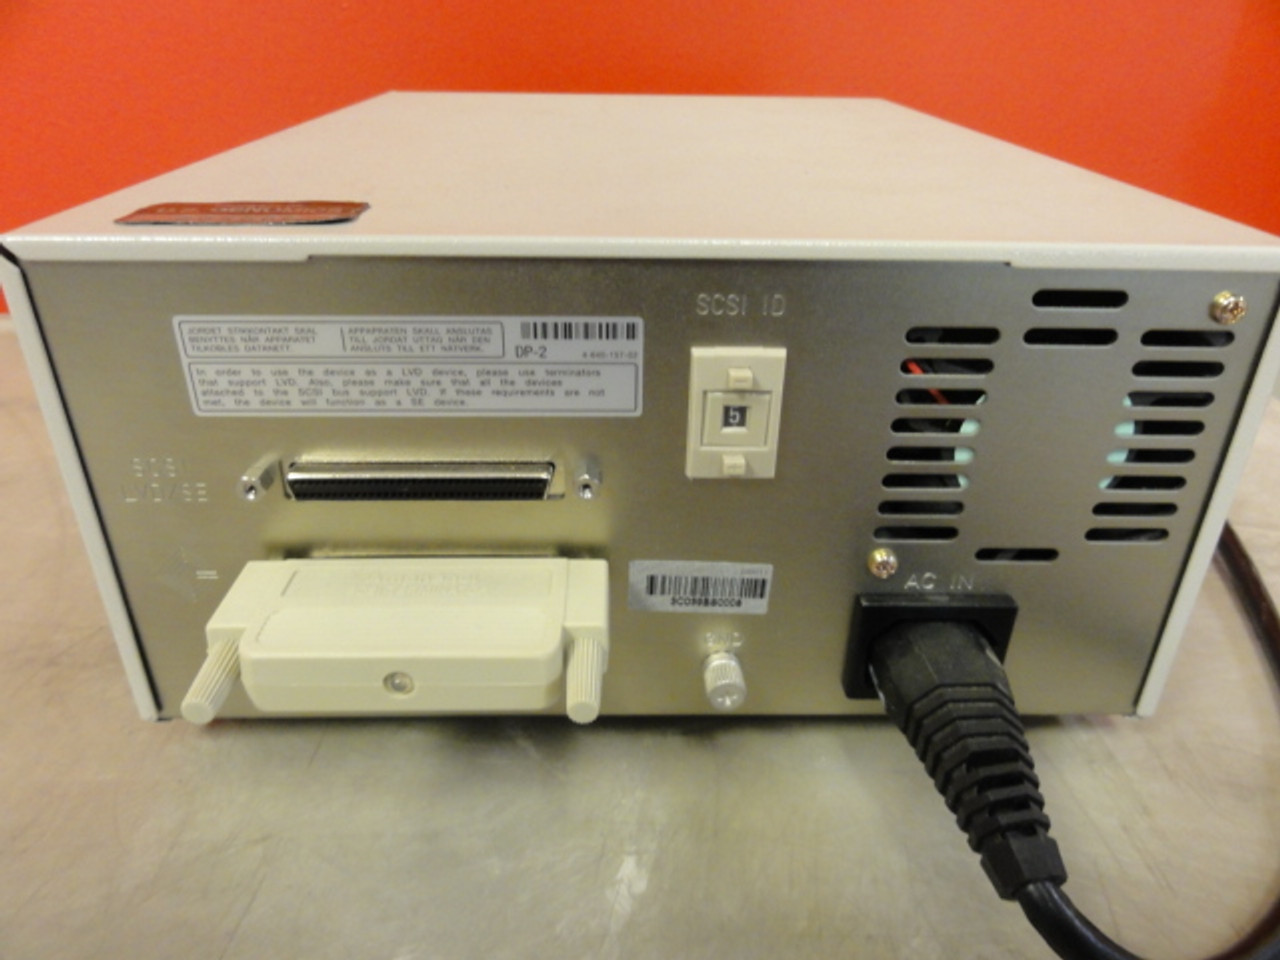 Compaq Model Dp2, 20/40 GB DAT 8 Cassette Autoloader